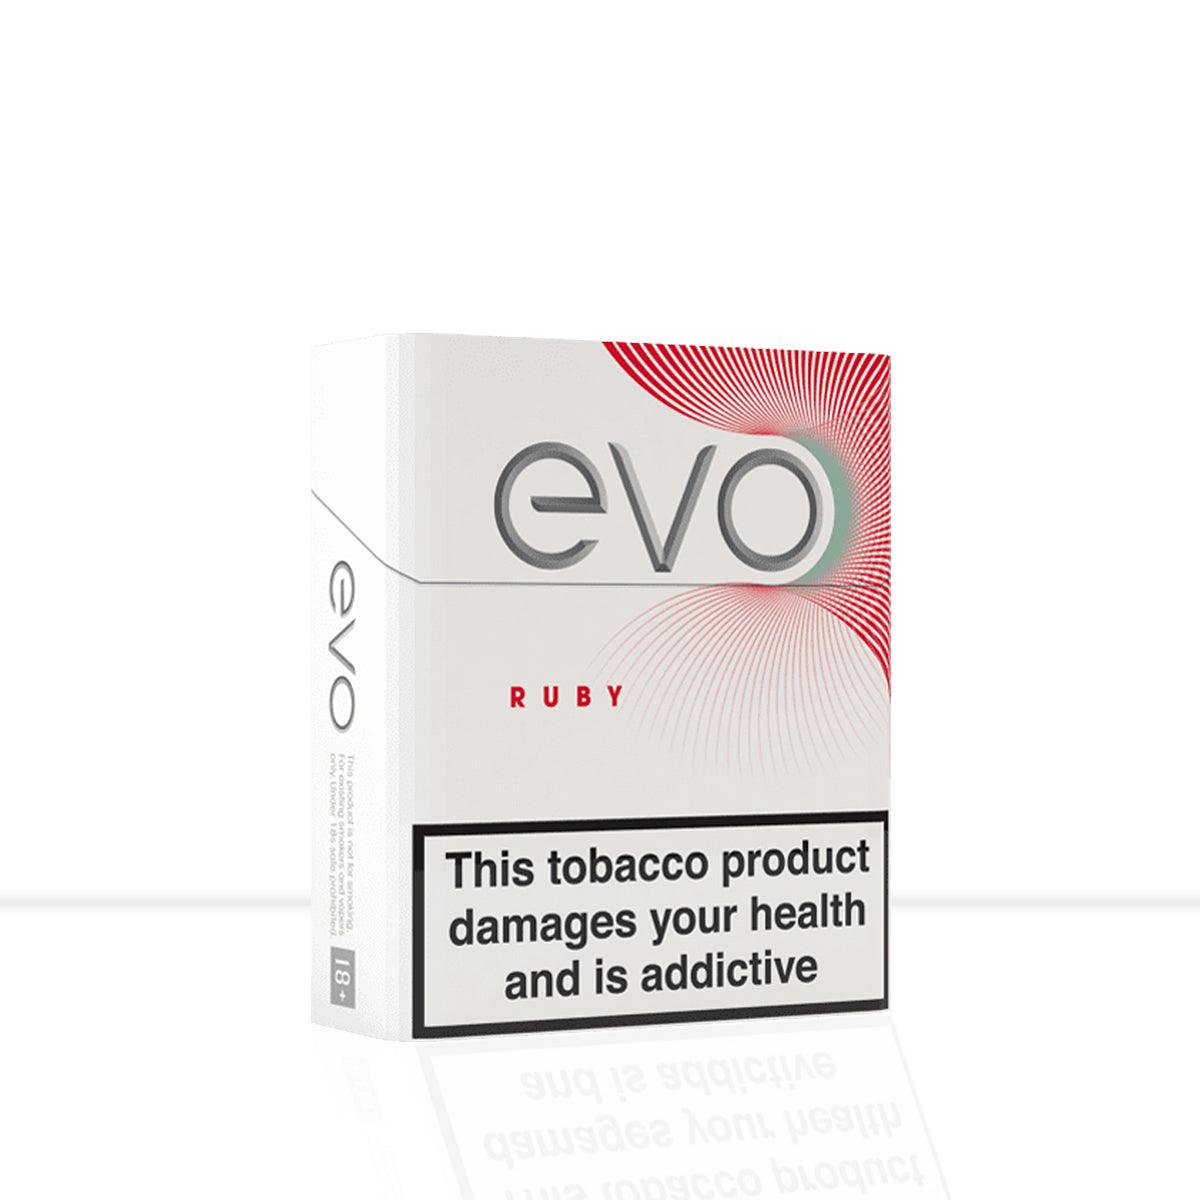 A twenty-pack of Evo brand heated tobacco sticks